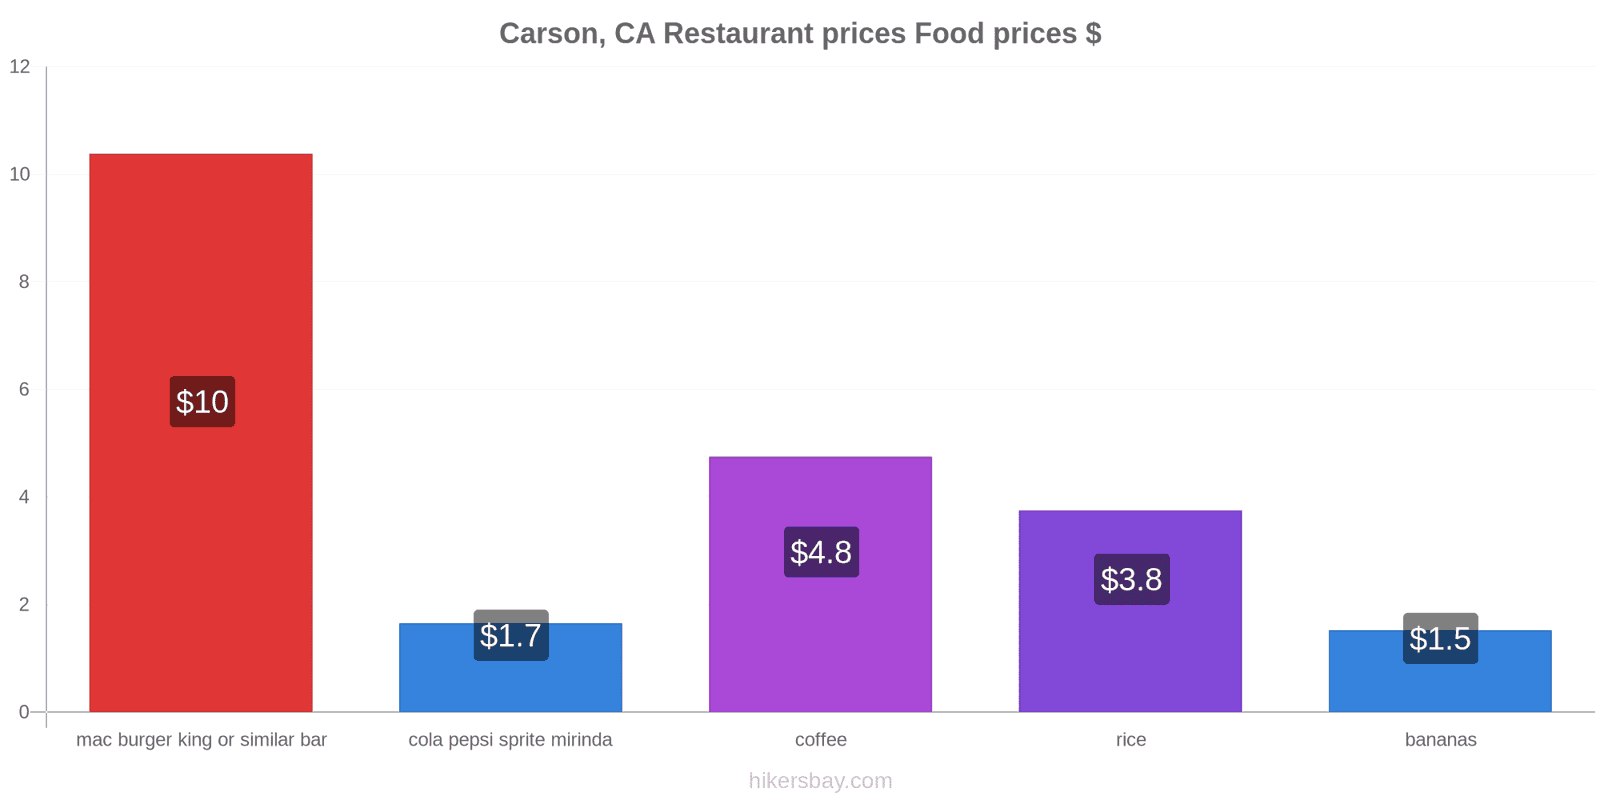 Carson, CA price changes hikersbay.com